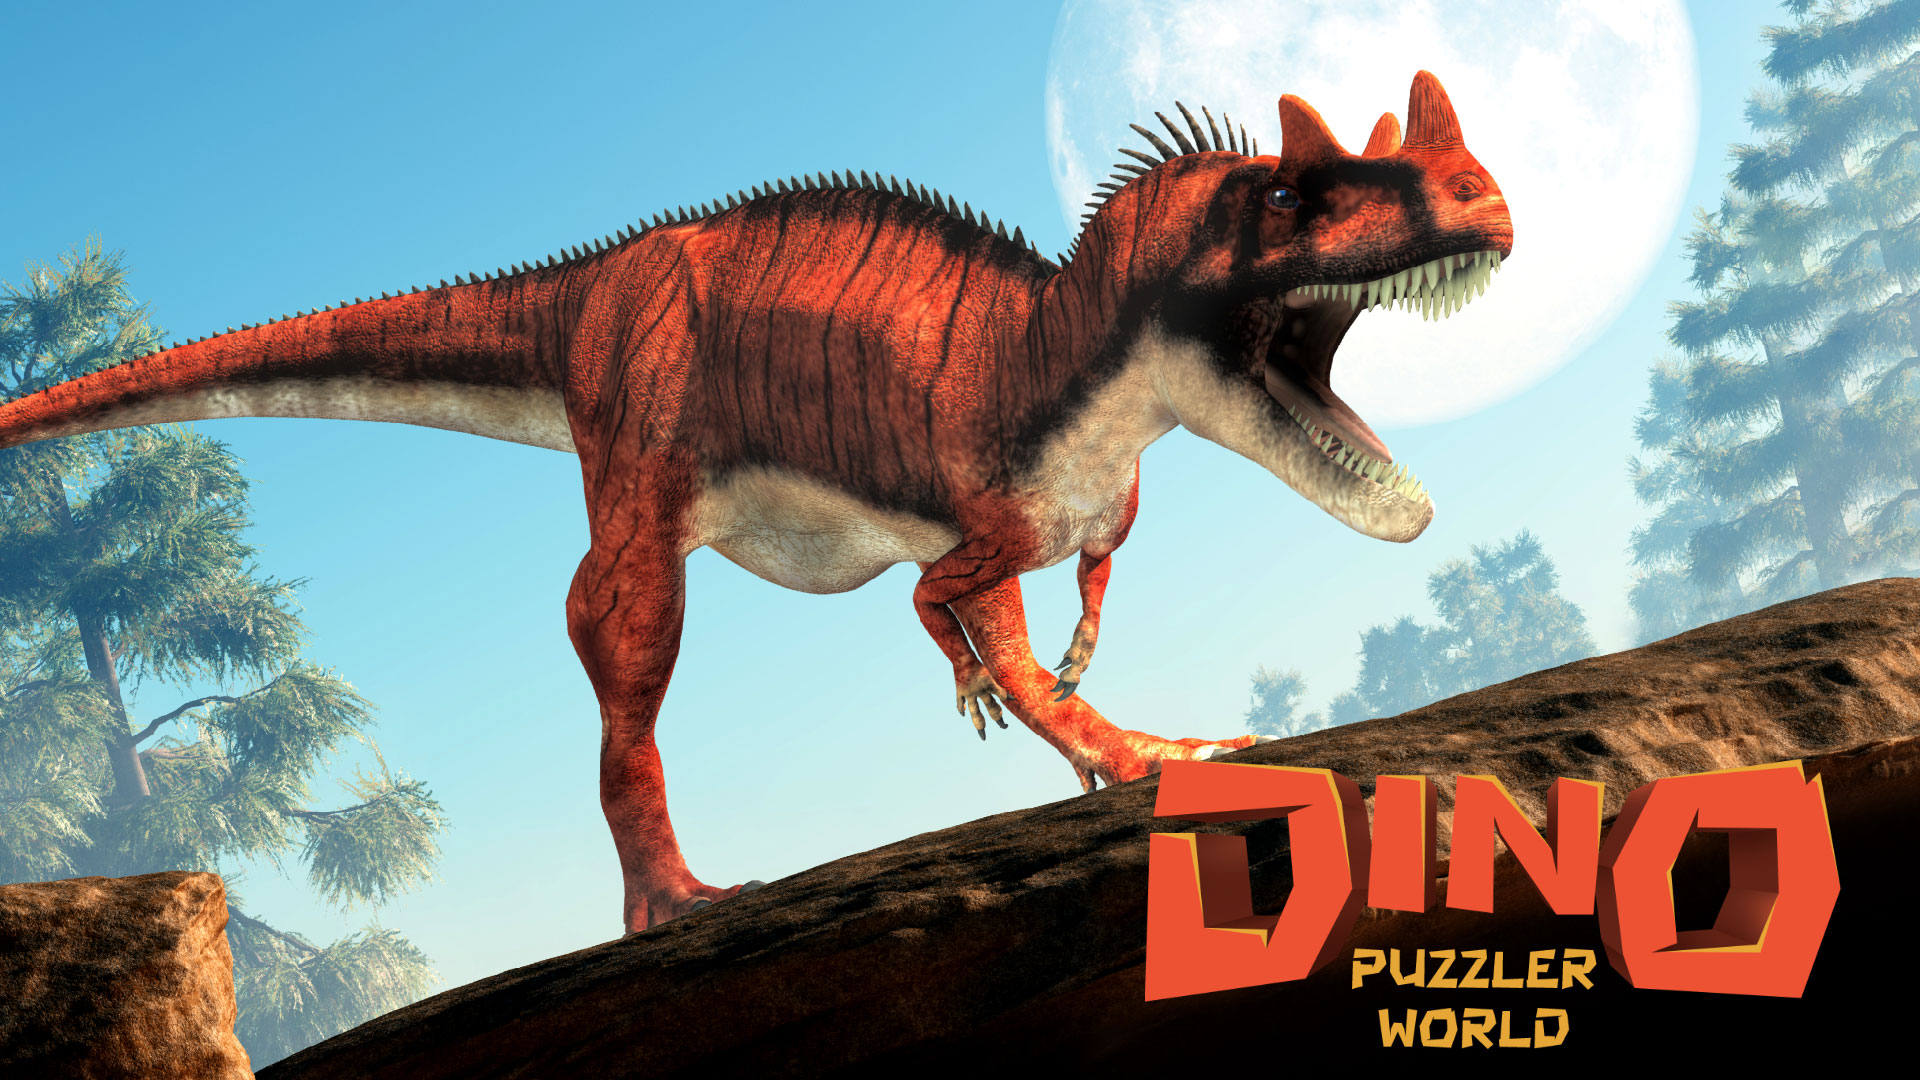 Dinossauro Construtor Fun Game